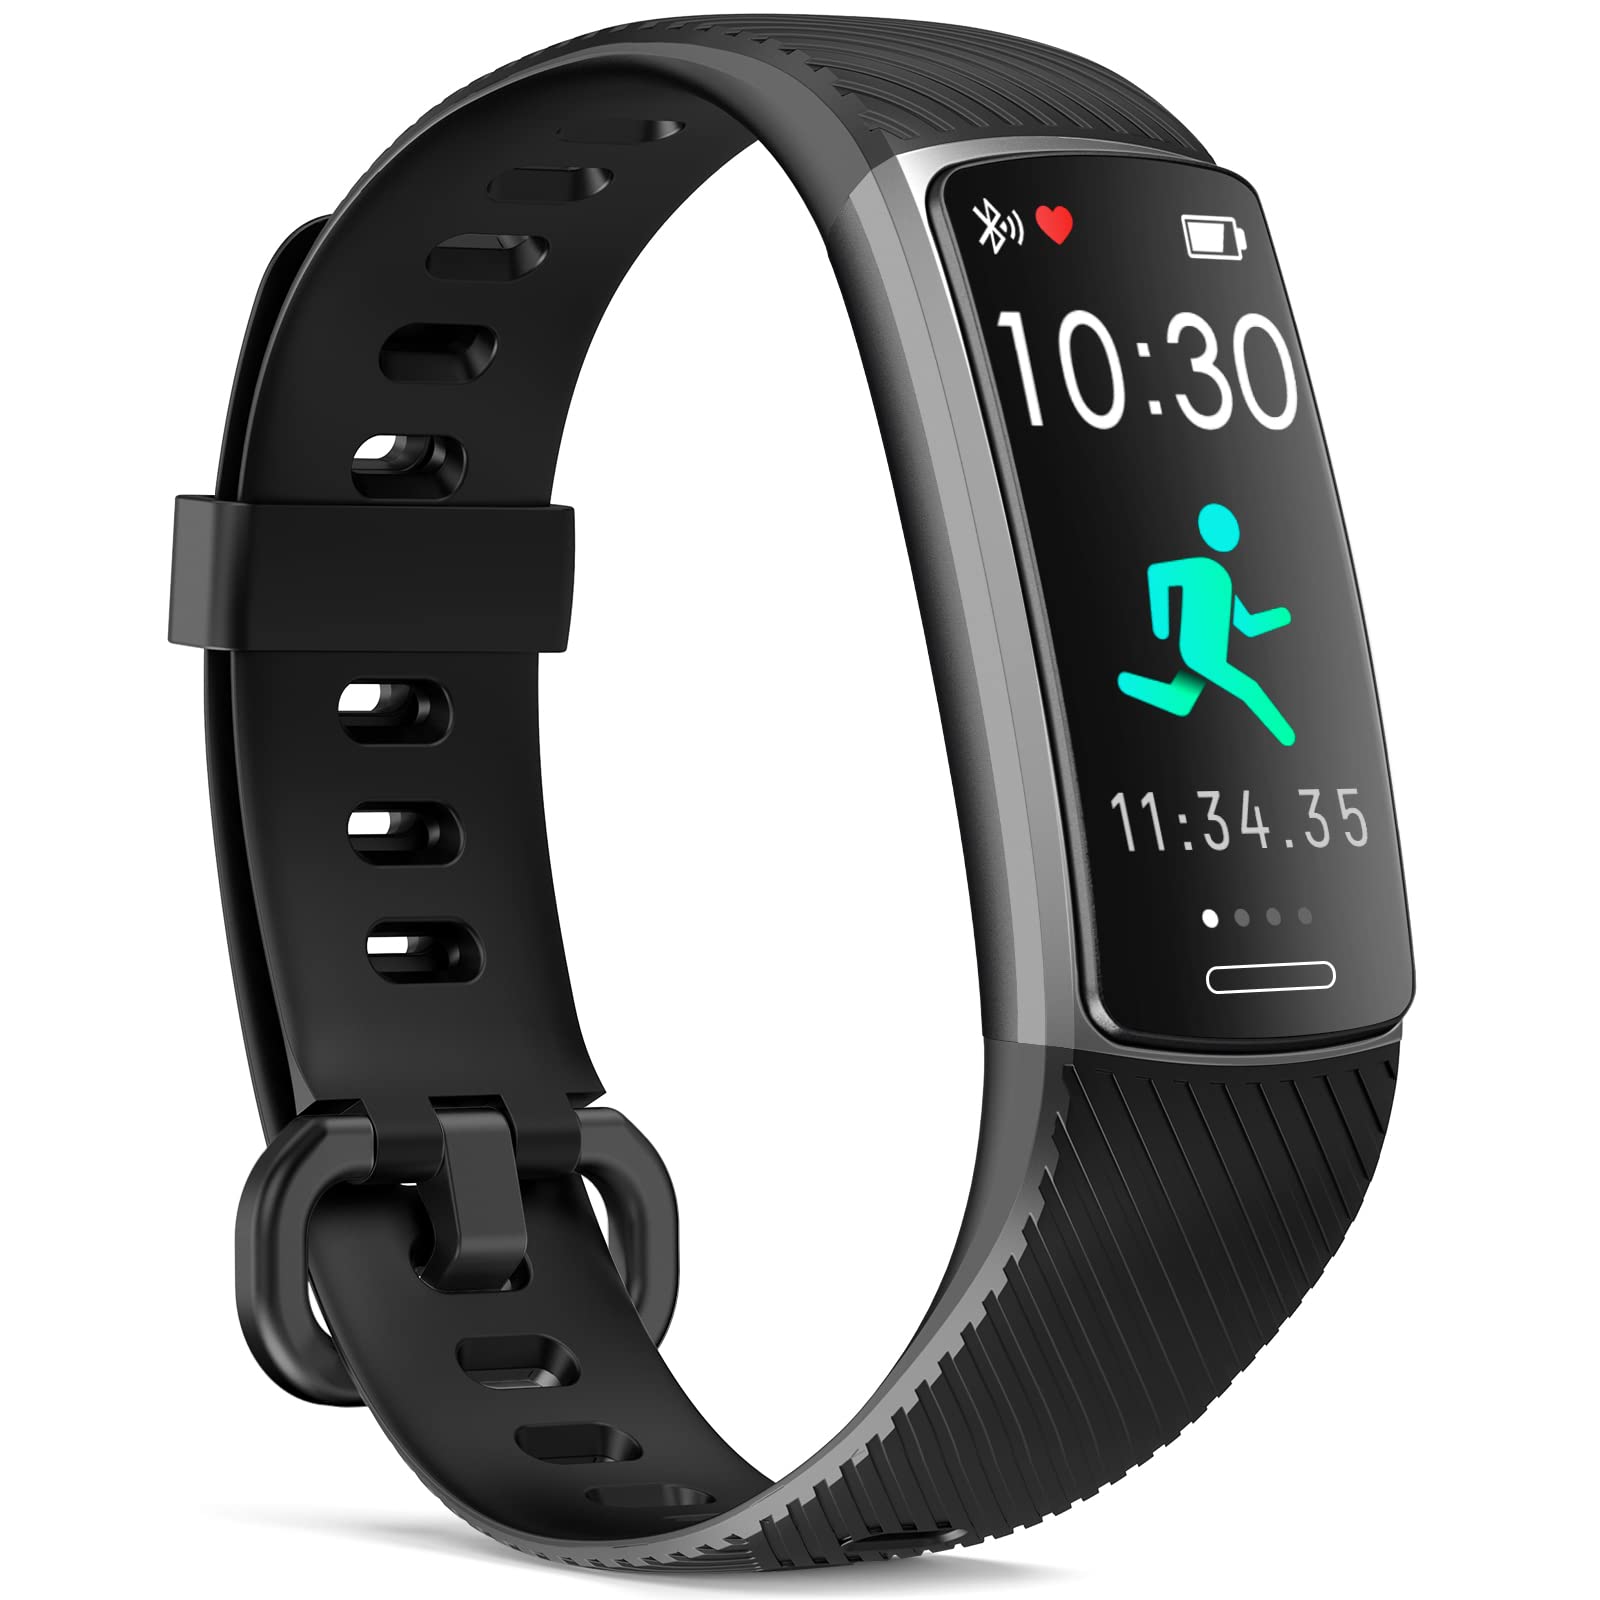 Livikey Fitness Tracker, Activity Tracker with Heart Rate Monitor & Sleep  Monitoring, IP68 Waterproof Pedometer, Calorie